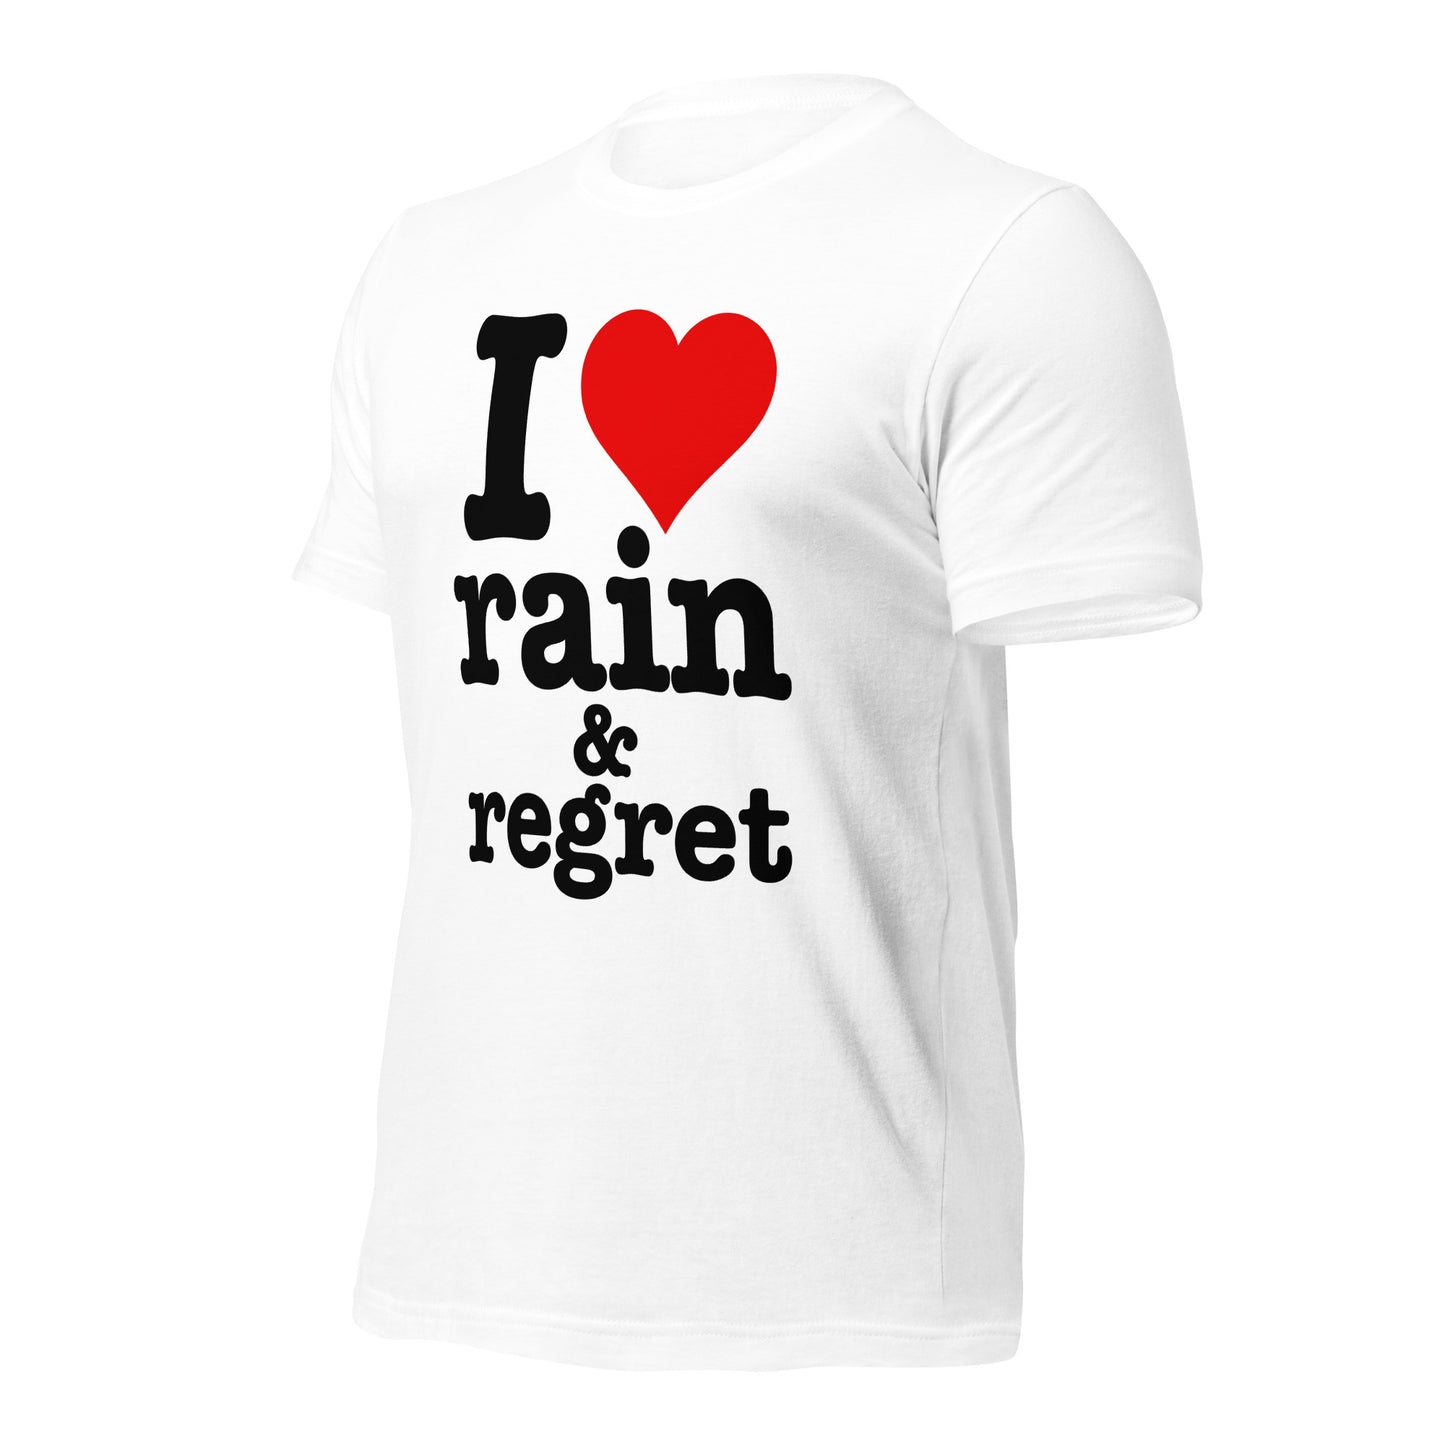 I heart rain & regret Unisex t-shirt